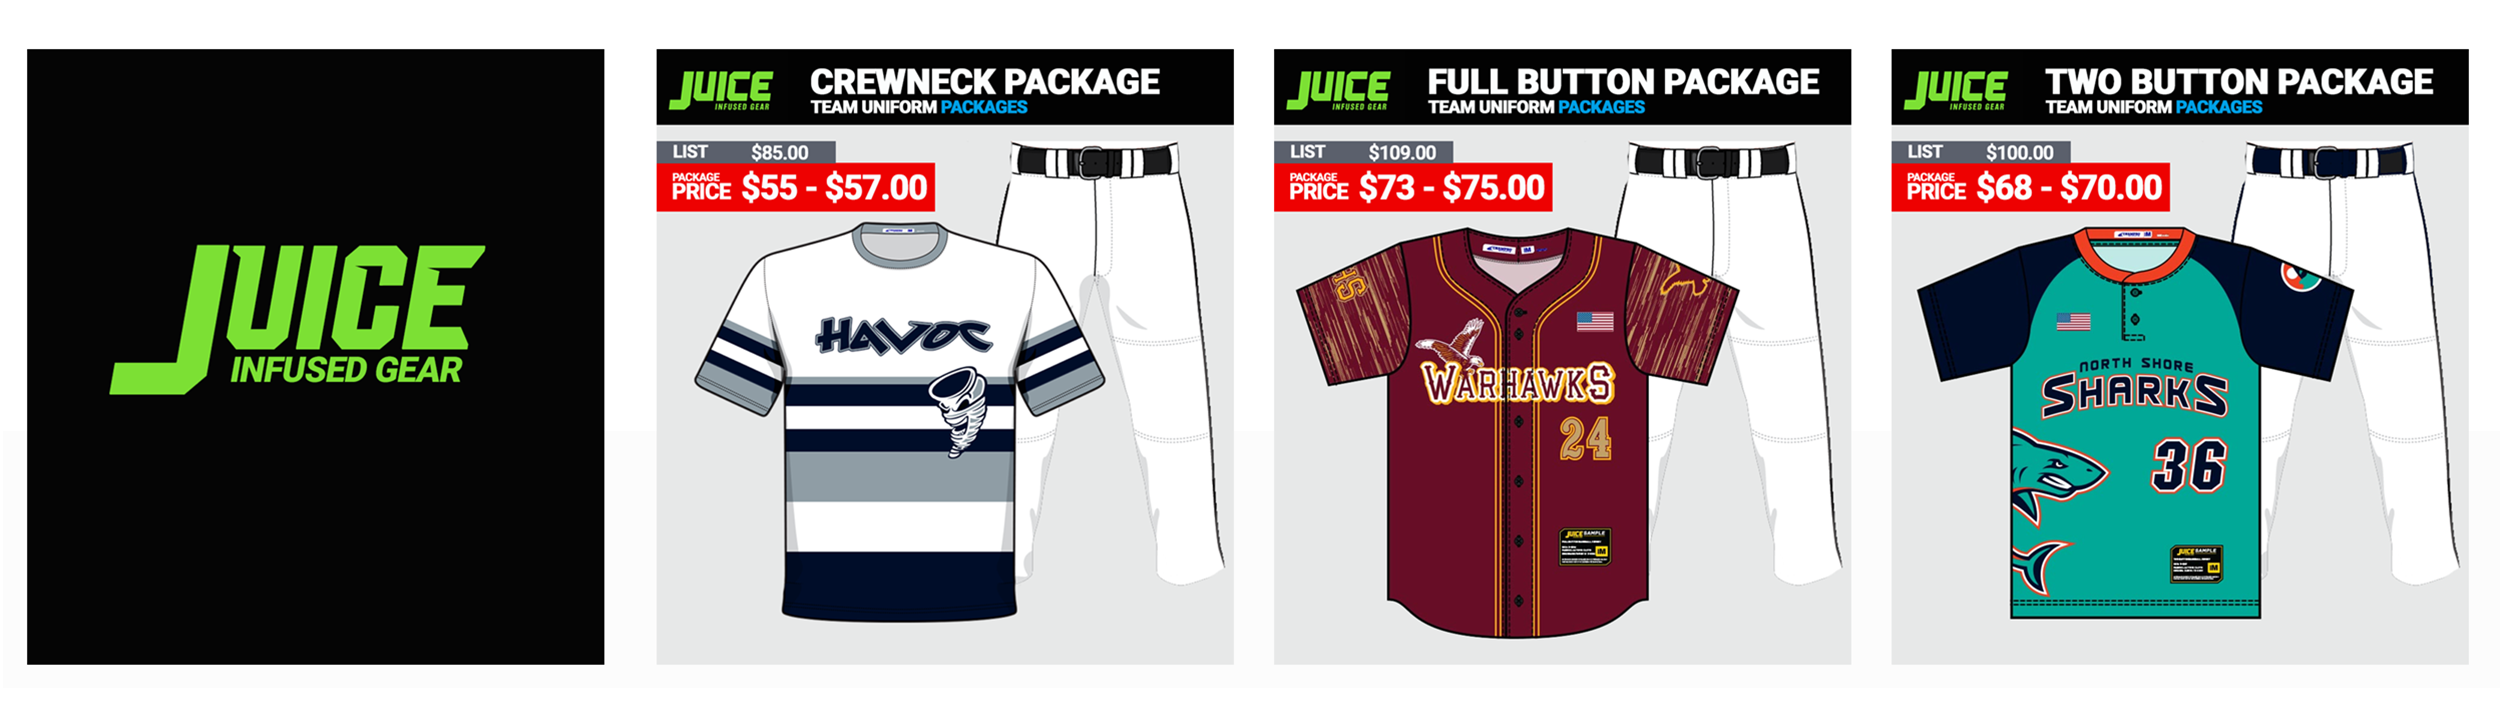 travel baseball uniform packages